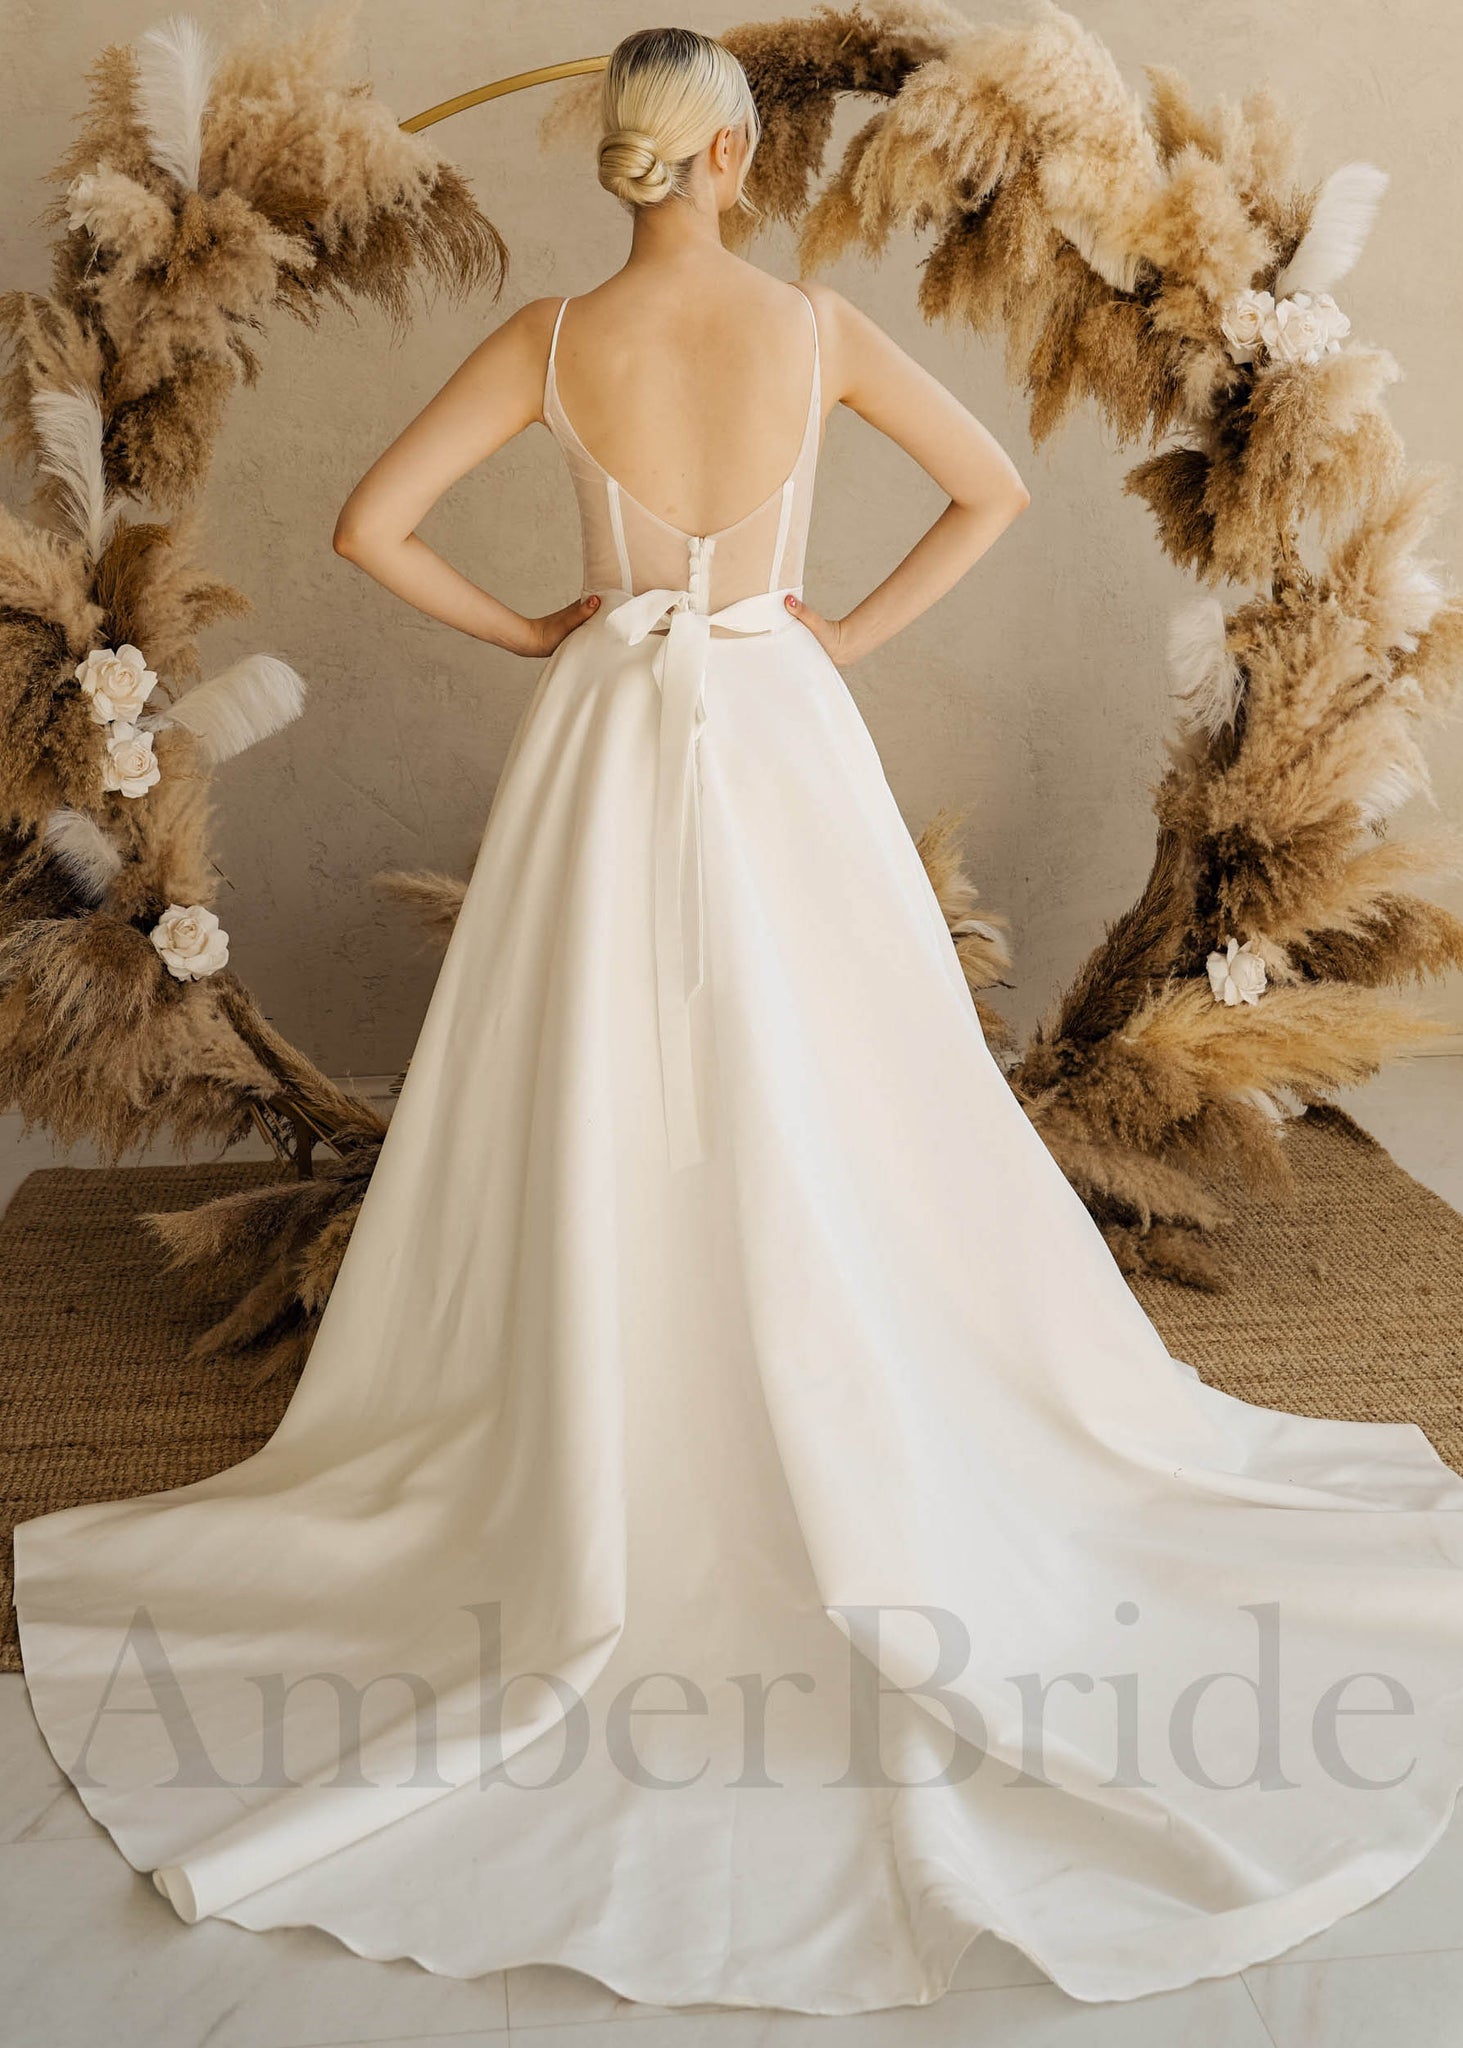 Minimalist A Line Satin Wedding Dress with Spaghetti Straps and Backless Design